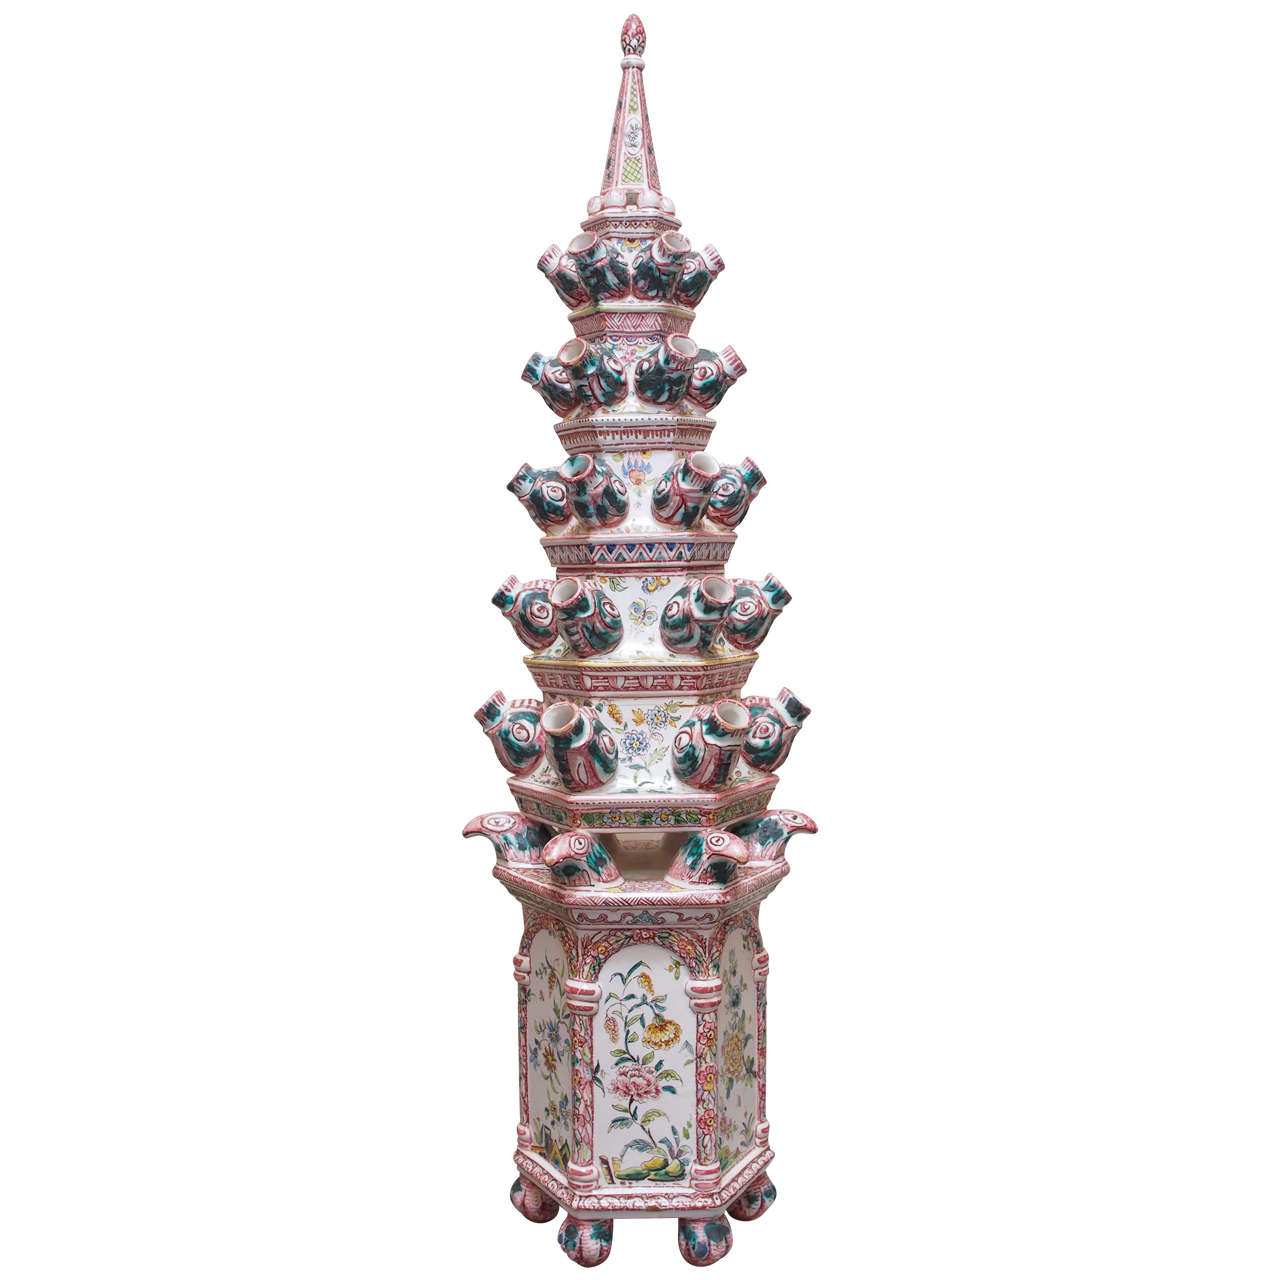 Faience Tin-Glazed, Monumental Pagoda Form Tulipiere